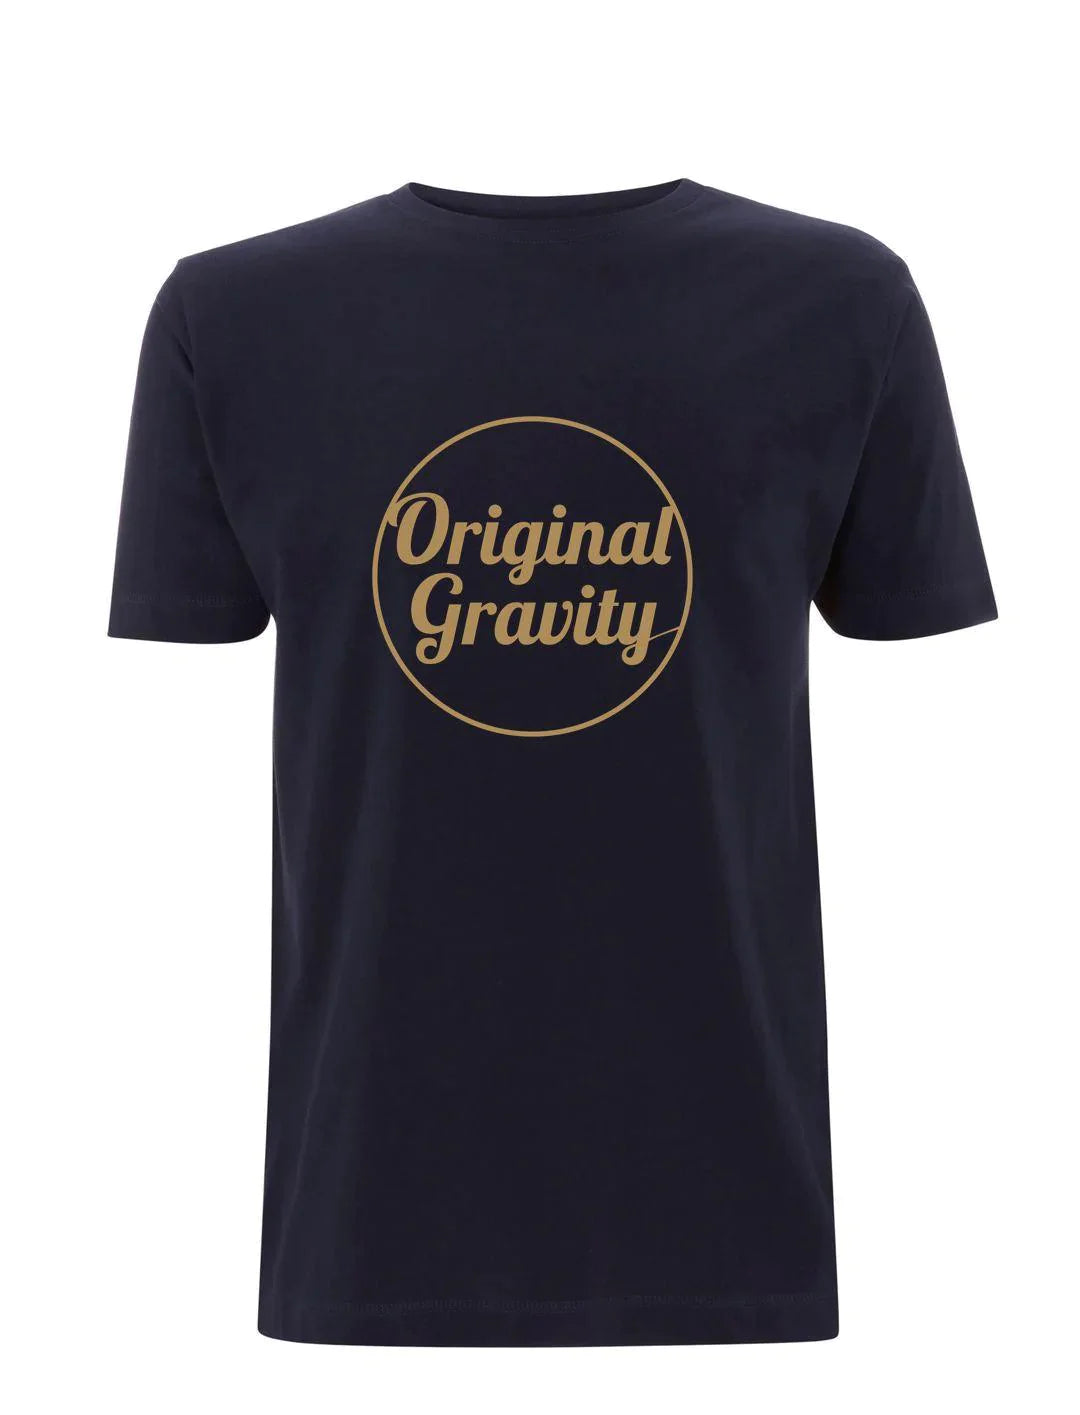 ROUND LOGO: Official Original Gravity Records Logo T-Shirt - SOUND IS COLOUR